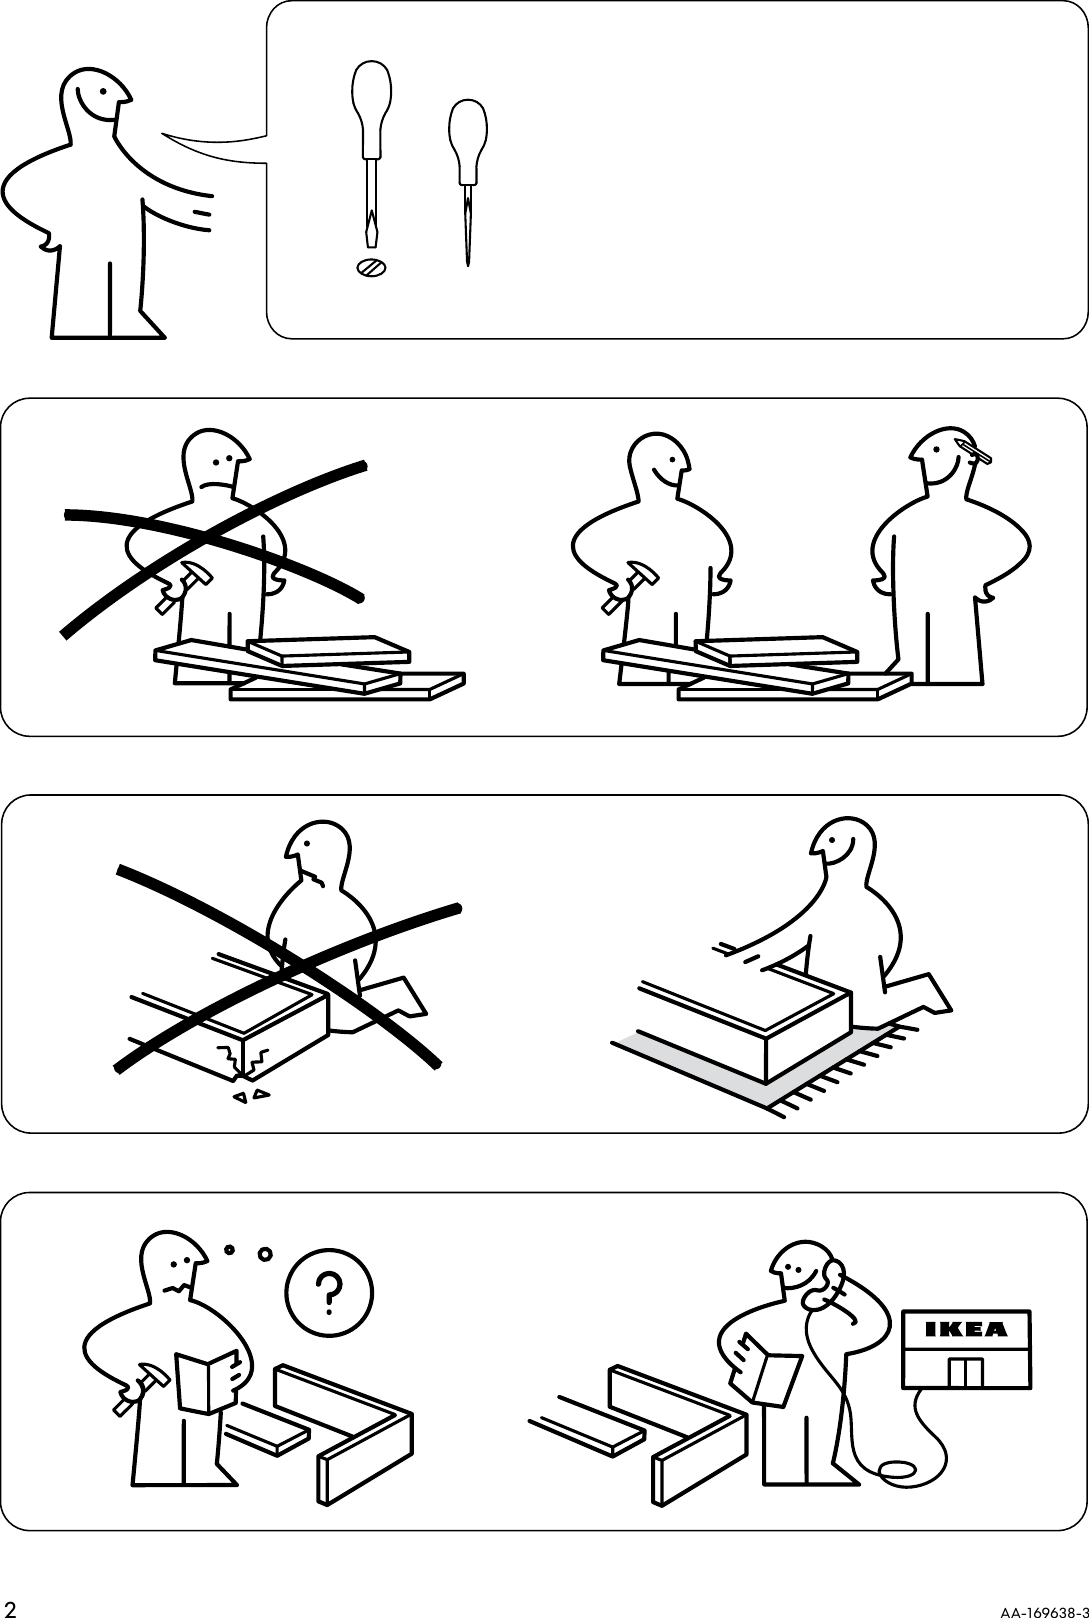 Page 2 of 8 - Ikea Ikea-Sniglar-Bed-Frame-W-Guide-Rail-Assembly-Instruction